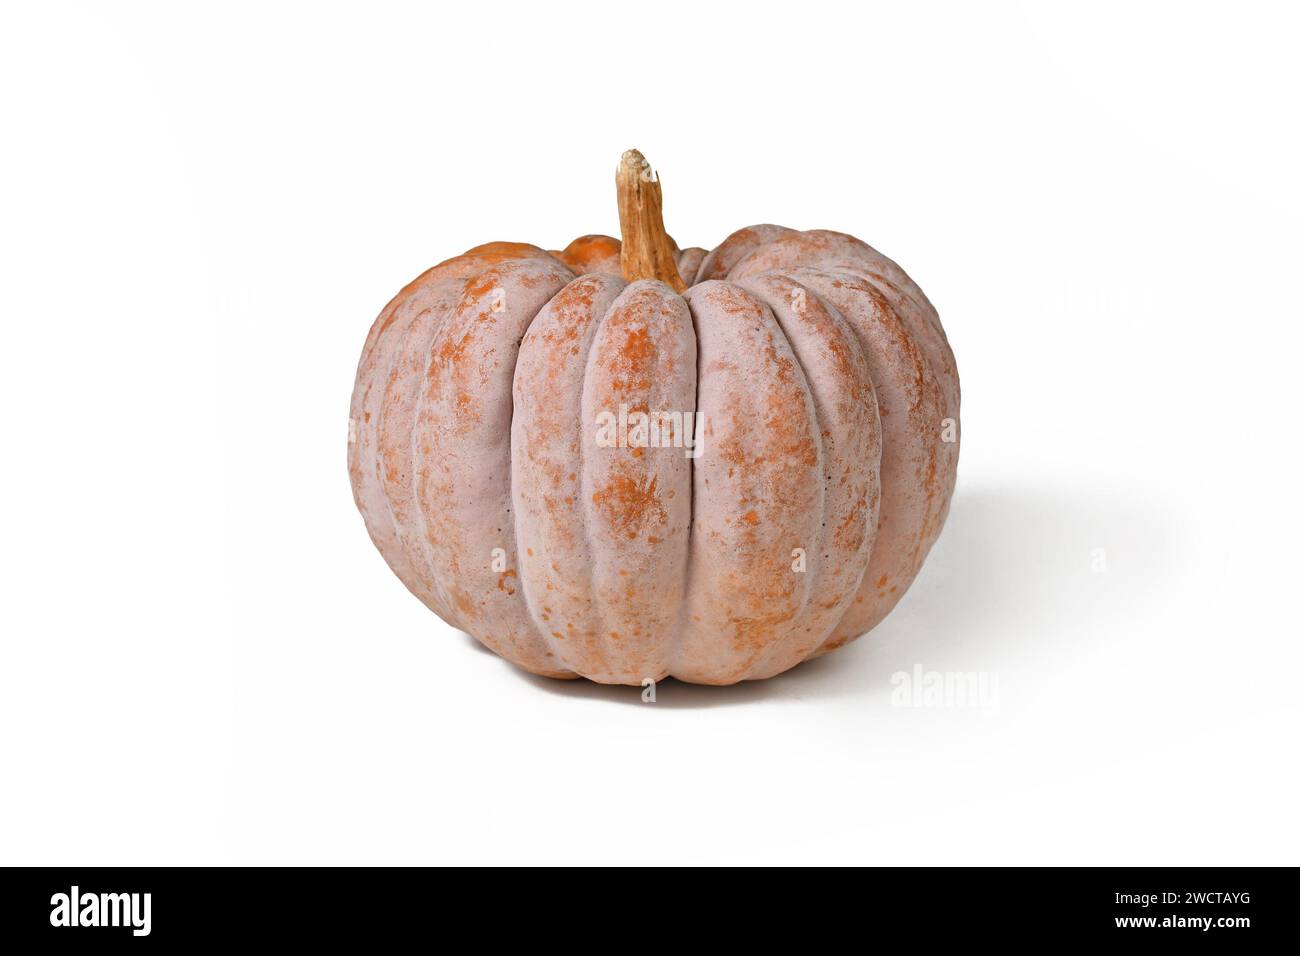 Mature ribbed 'Black Futsu' pumpkin squash with grey and orange skin on white backgroun Stock Photo